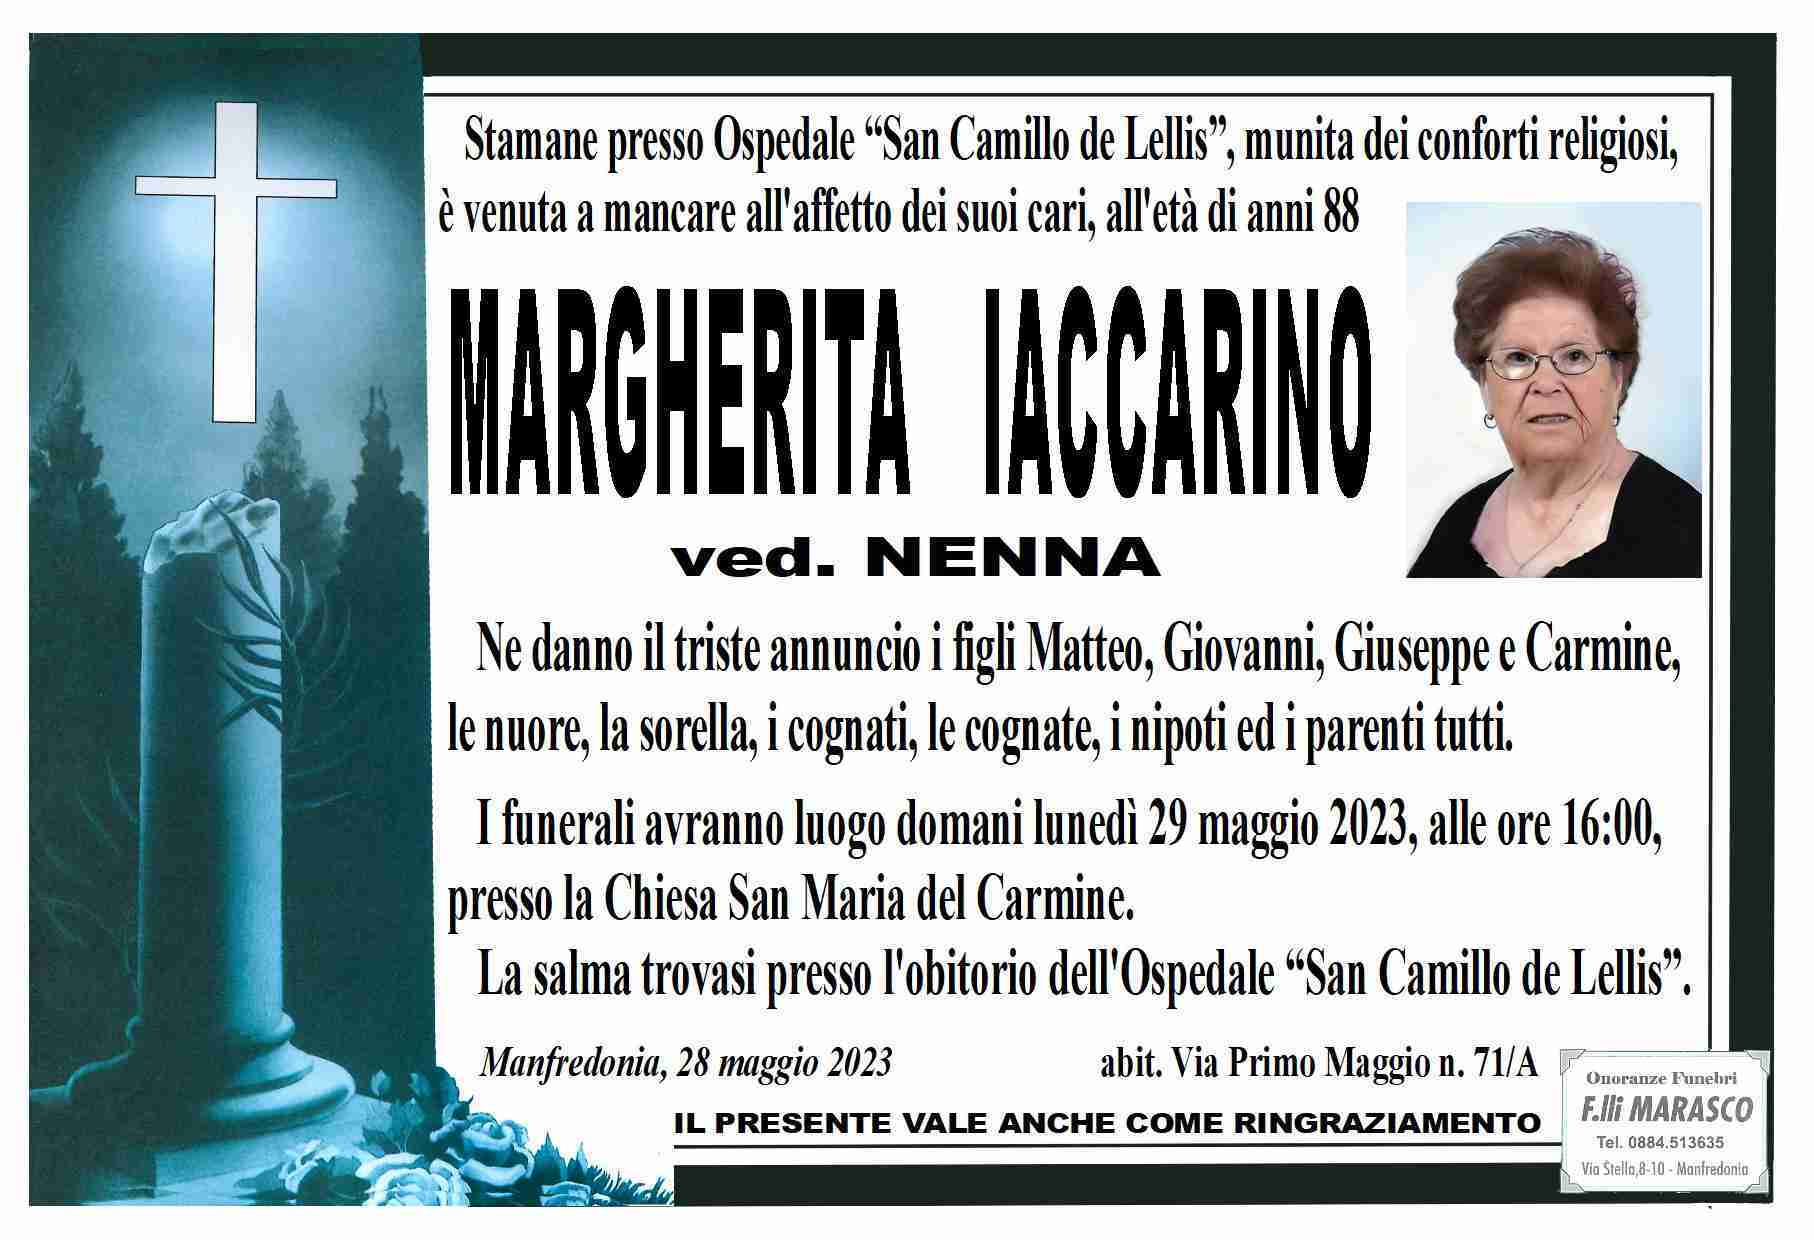 Margherita Iaccarino